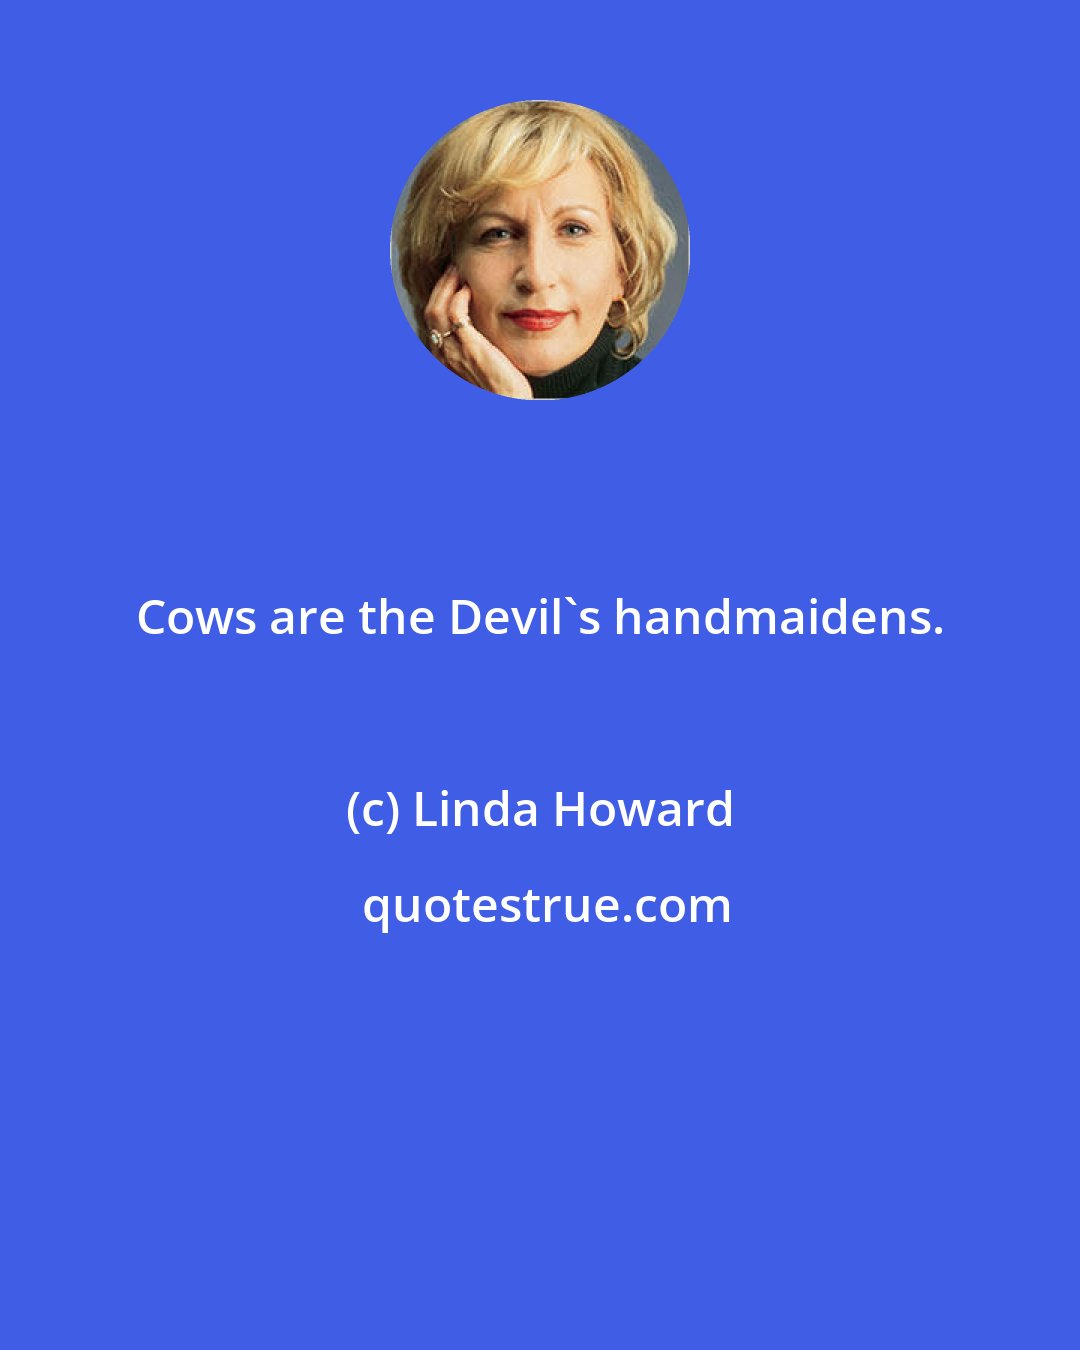 Linda Howard: Cows are the Devil's handmaidens.